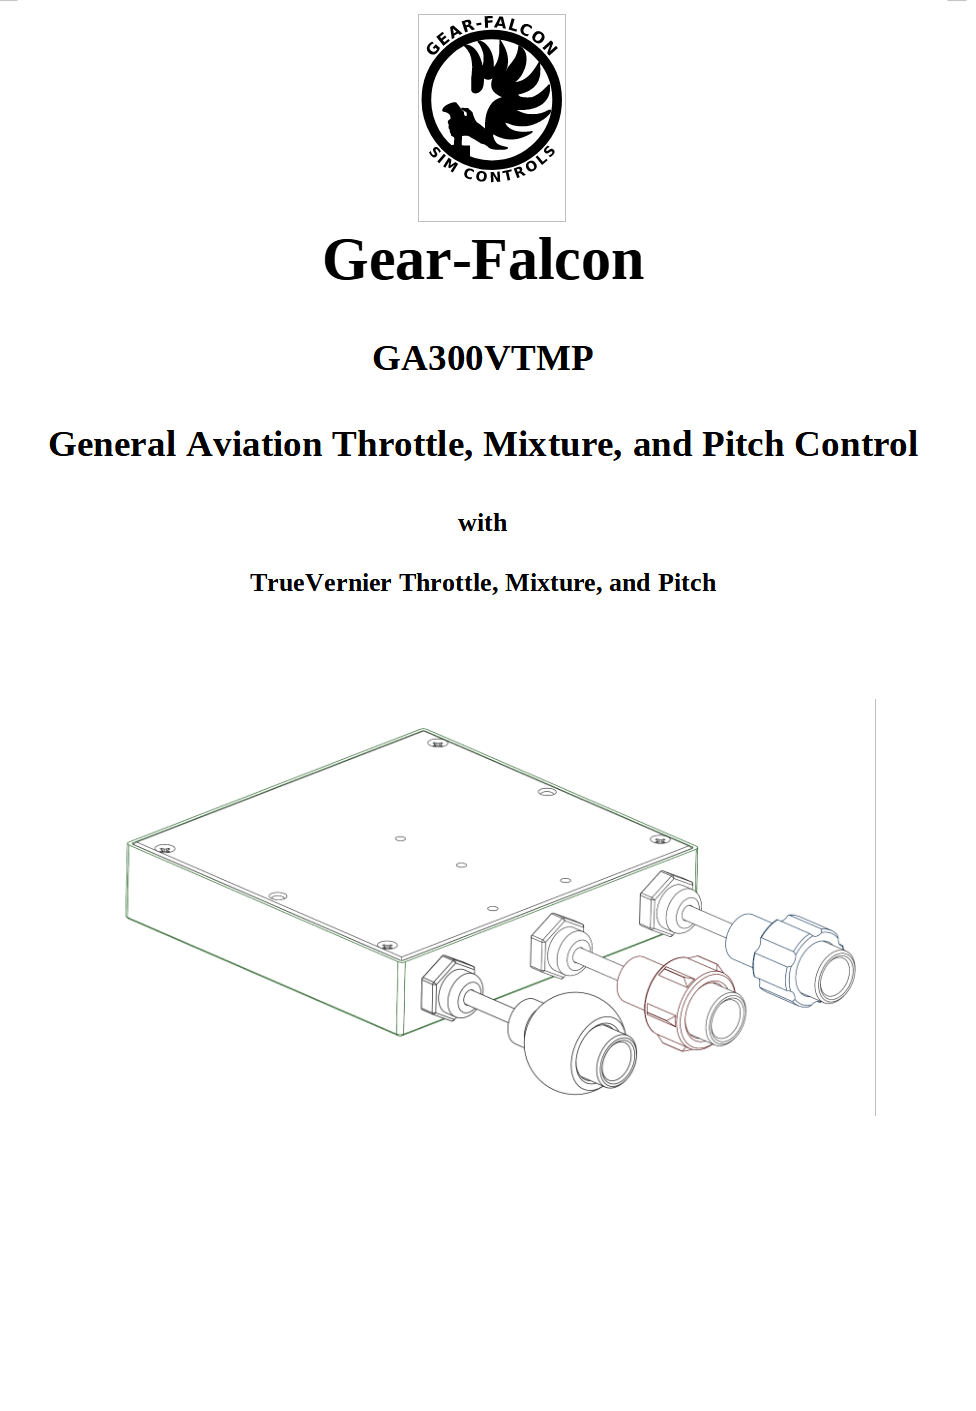 General Aviation Vernier Throttle/Mixture/Pitch with True Vernier control - GA300VTMP